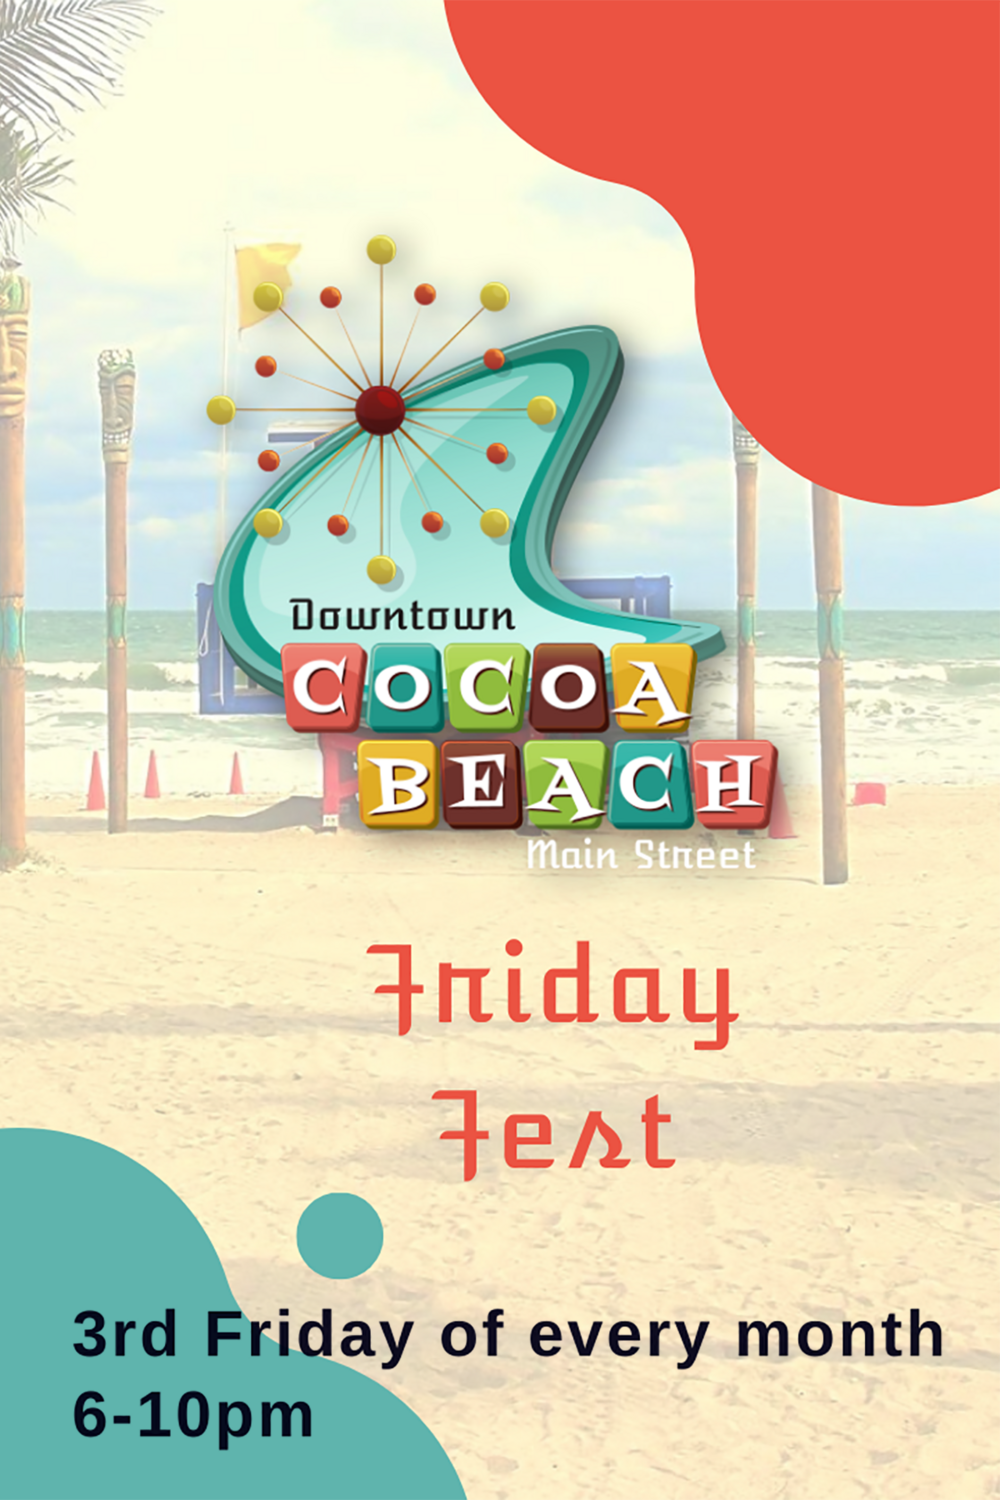 FRIDAY 2/17/2023 - Downtown Cocoa Beach - Cocoa Beach Friday Fest